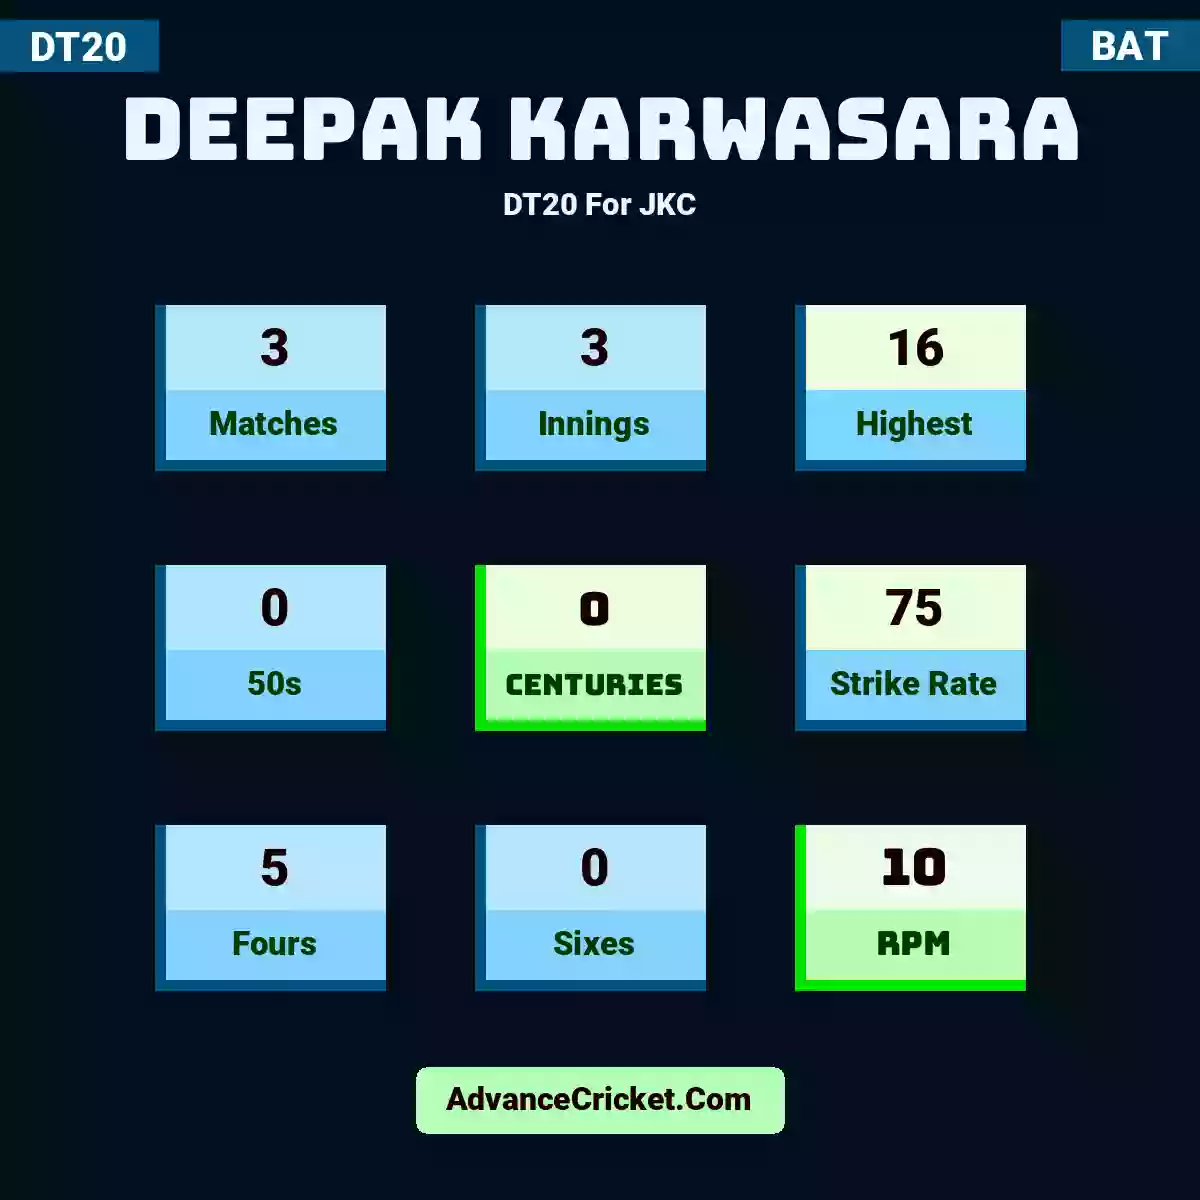 Deepak Karwasara DT20  For JKC, Deepak Karwasara played 3 matches, scored 16 runs as highest, 0 half-centuries, and 0 centuries, with a strike rate of 75. D.Karwasara hit 5 fours and 0 sixes, with an RPM of 10.